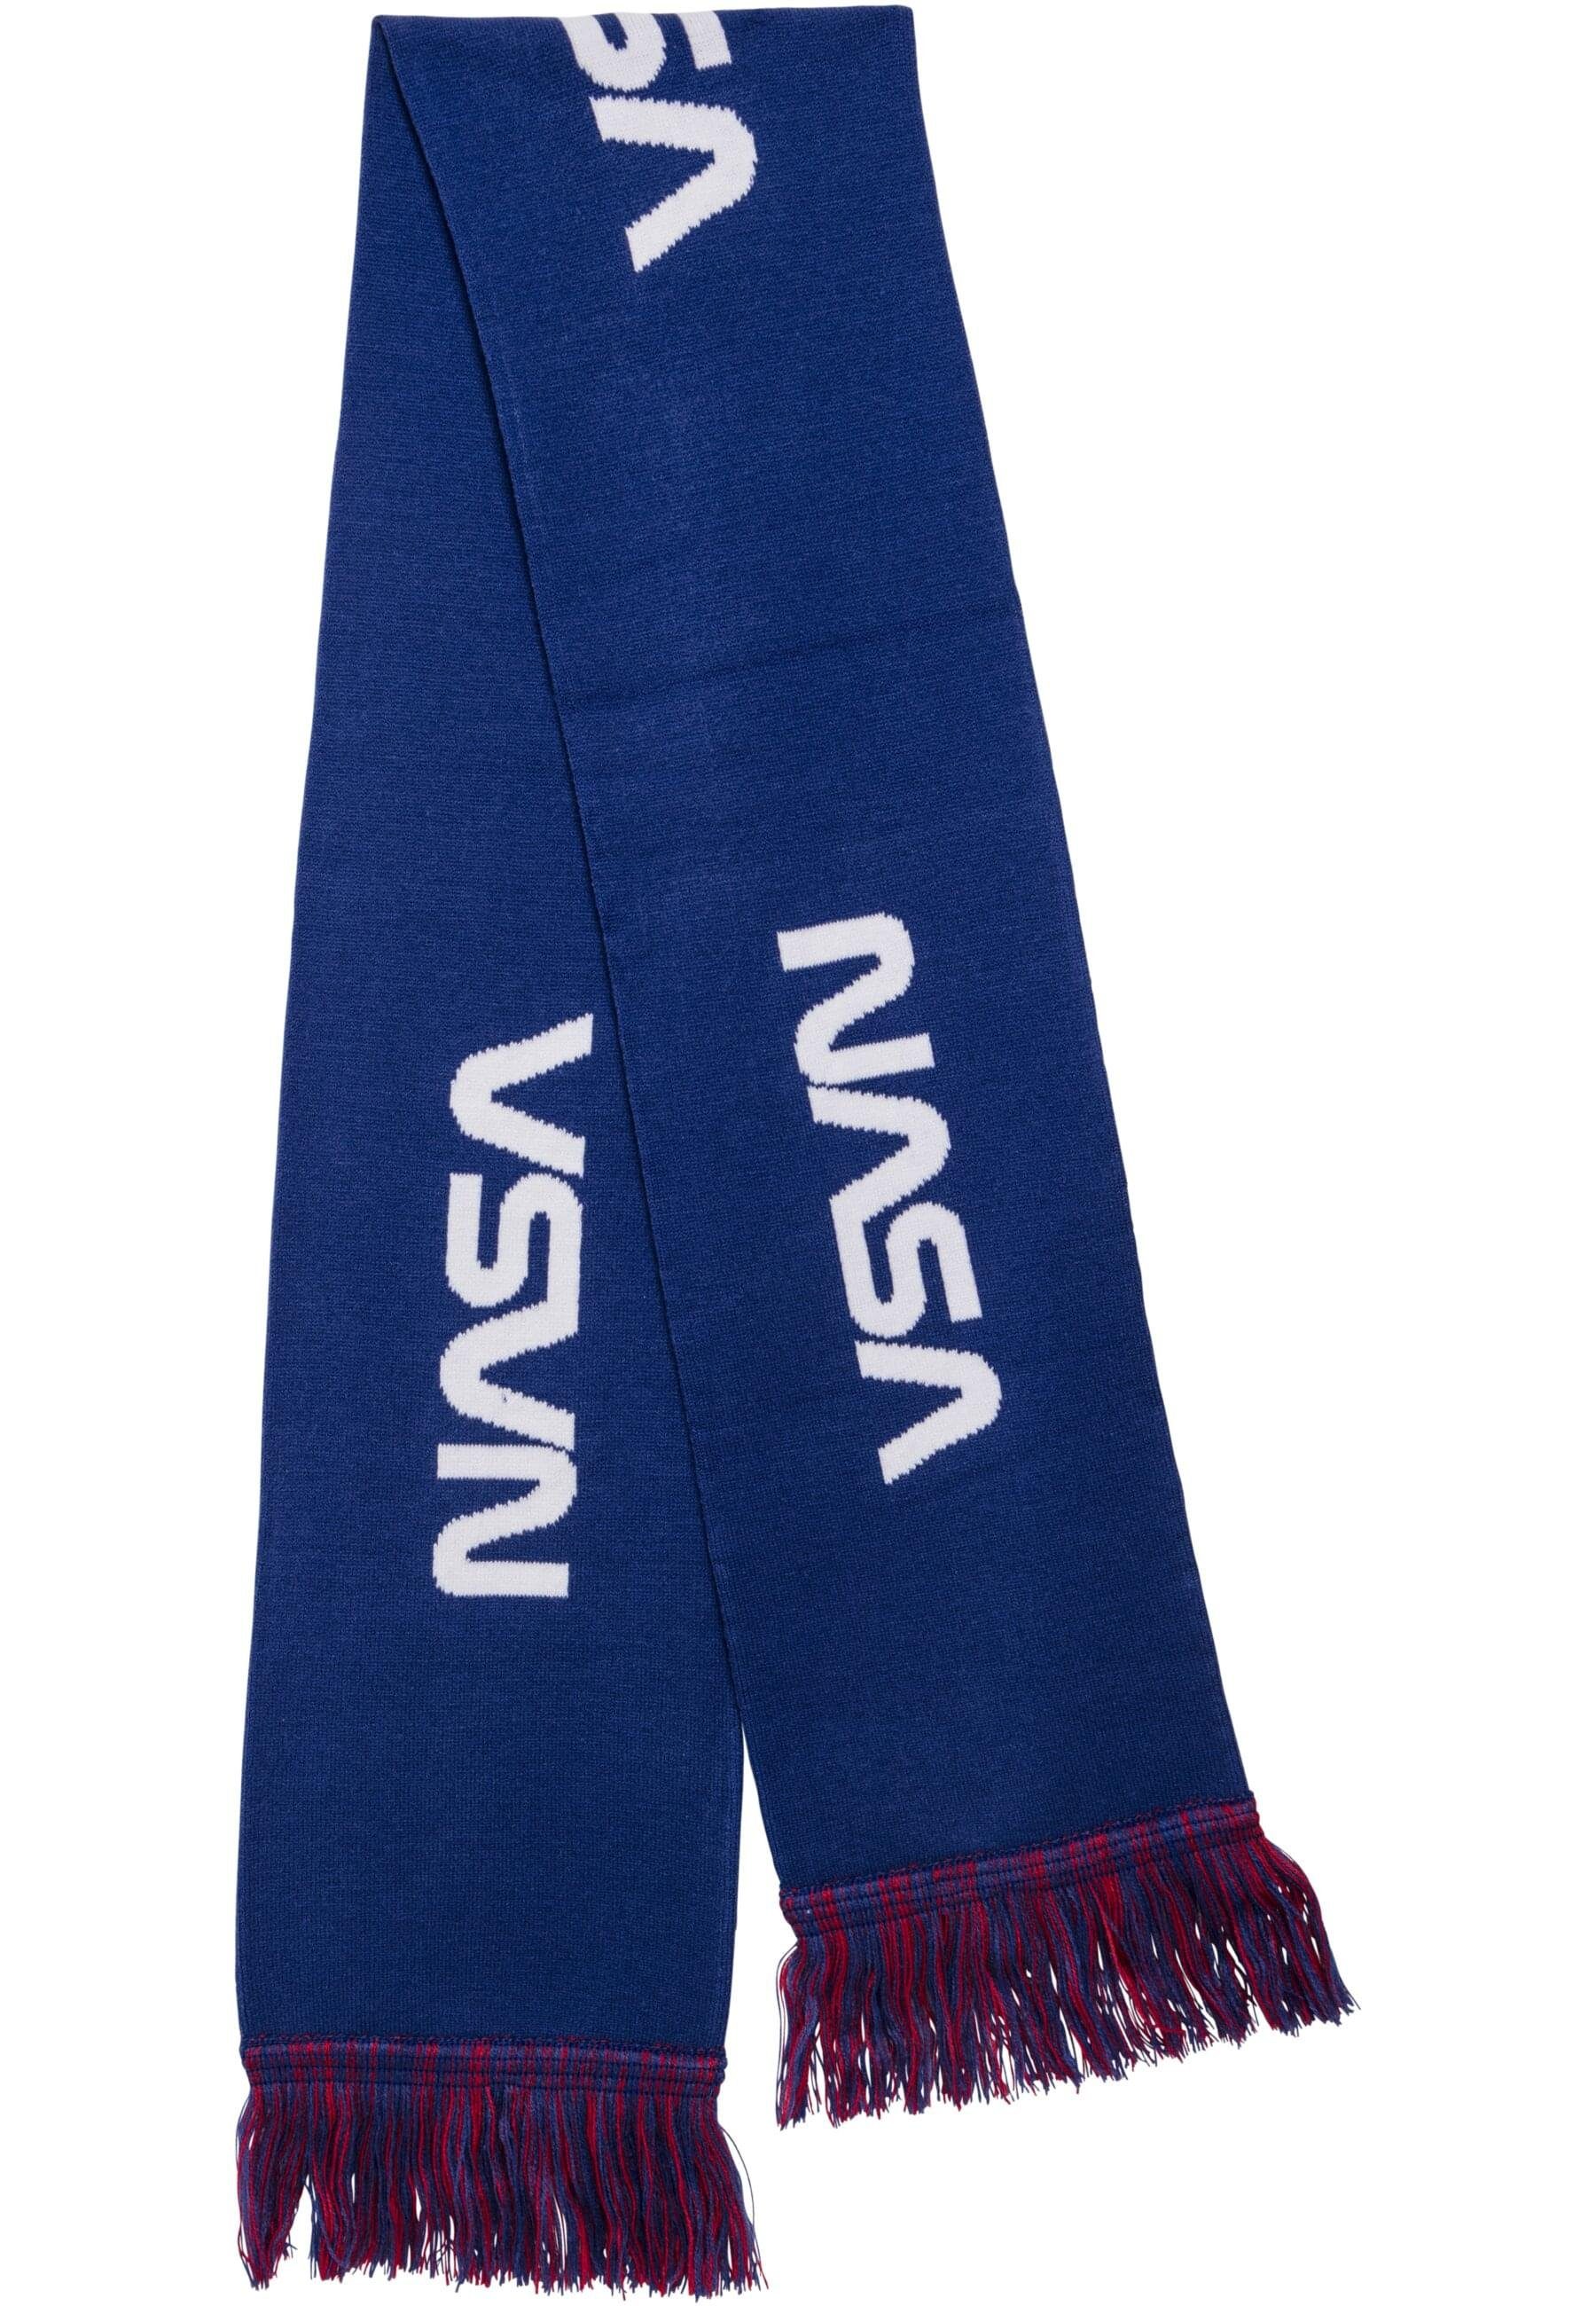 MisterTee Schal blue/red/white Unisex Knitted, NASA (1-St) Scarf